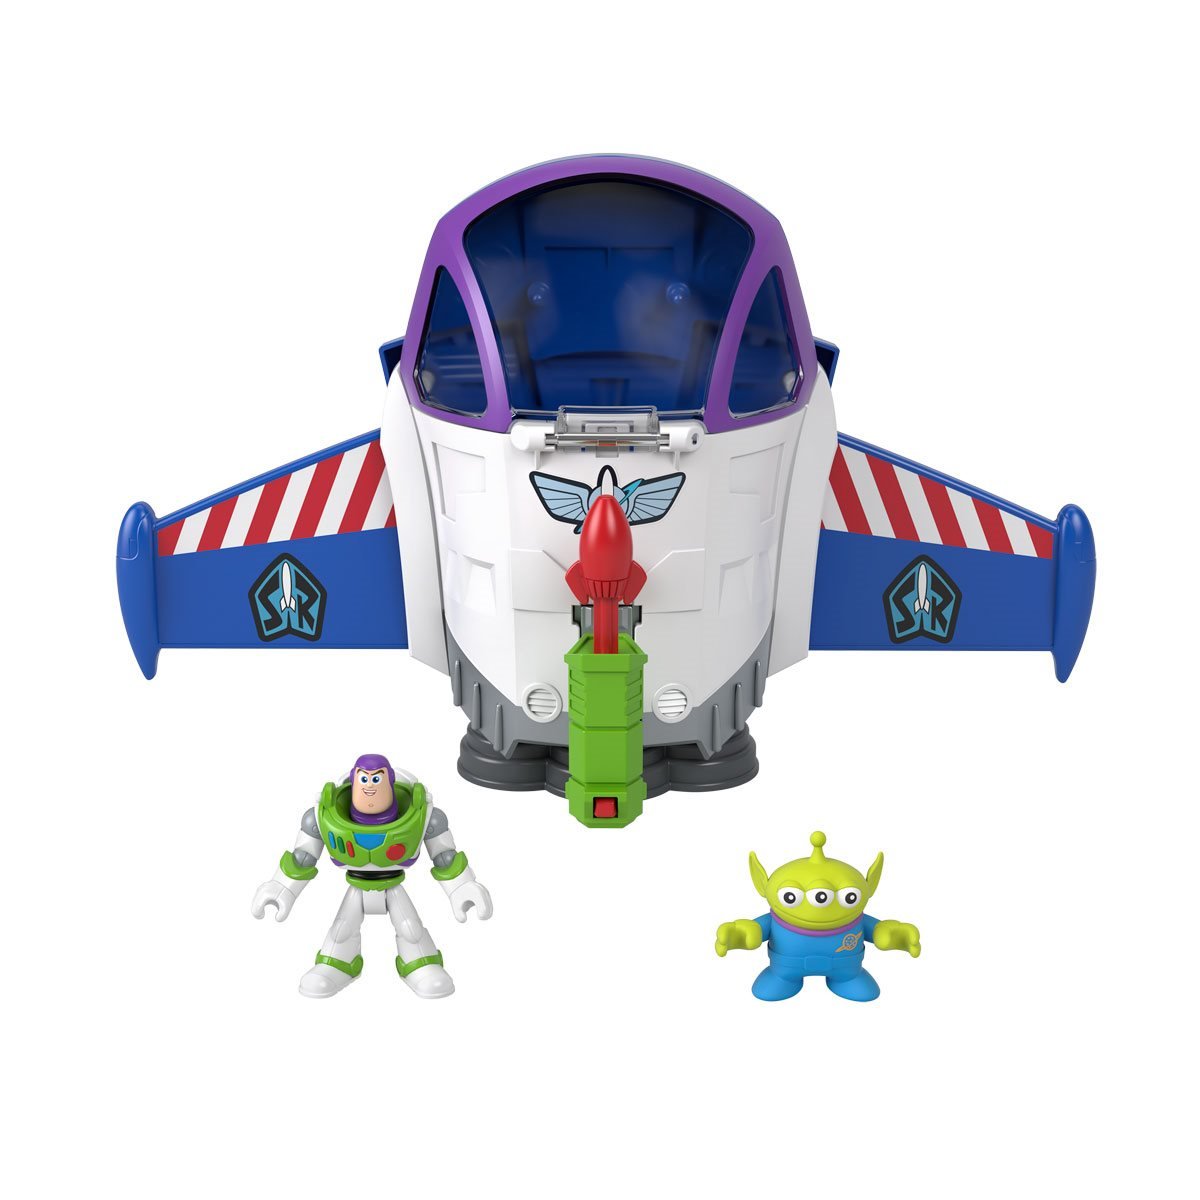 buzz lightyear toy imaginext